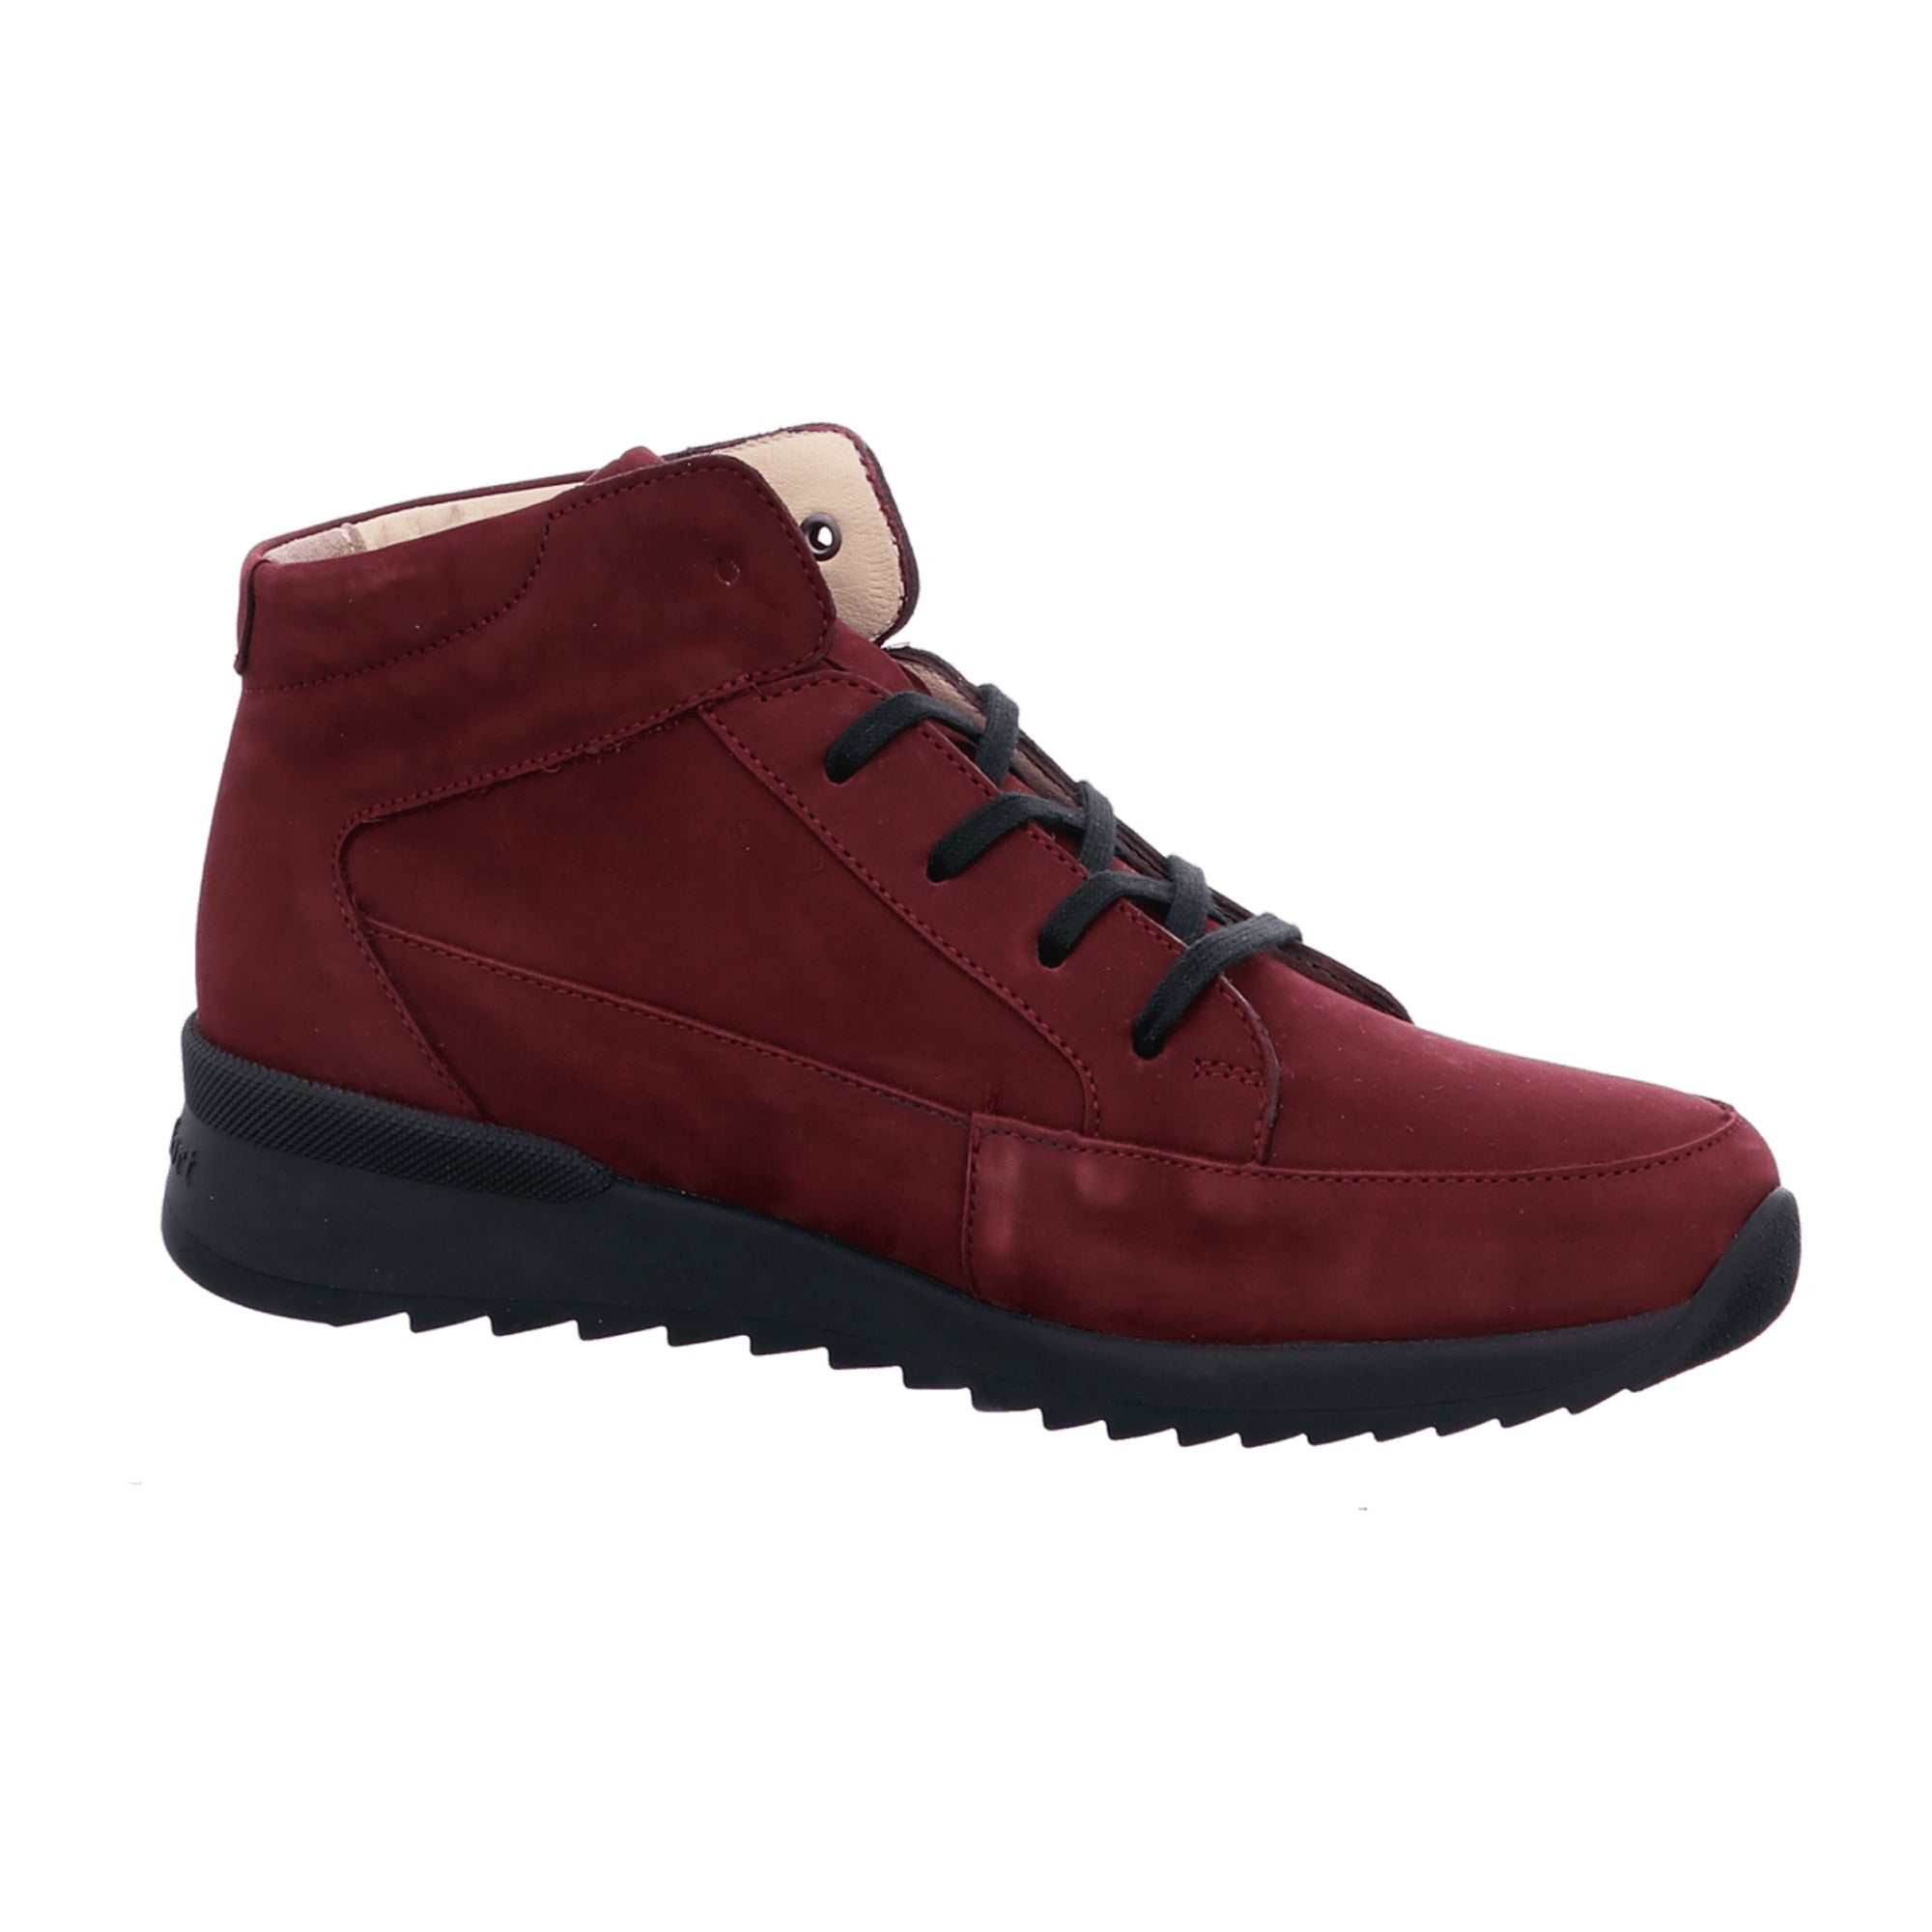 Finn Comfort Burley Redwine Women's Comfort Shoes - Stylish Red